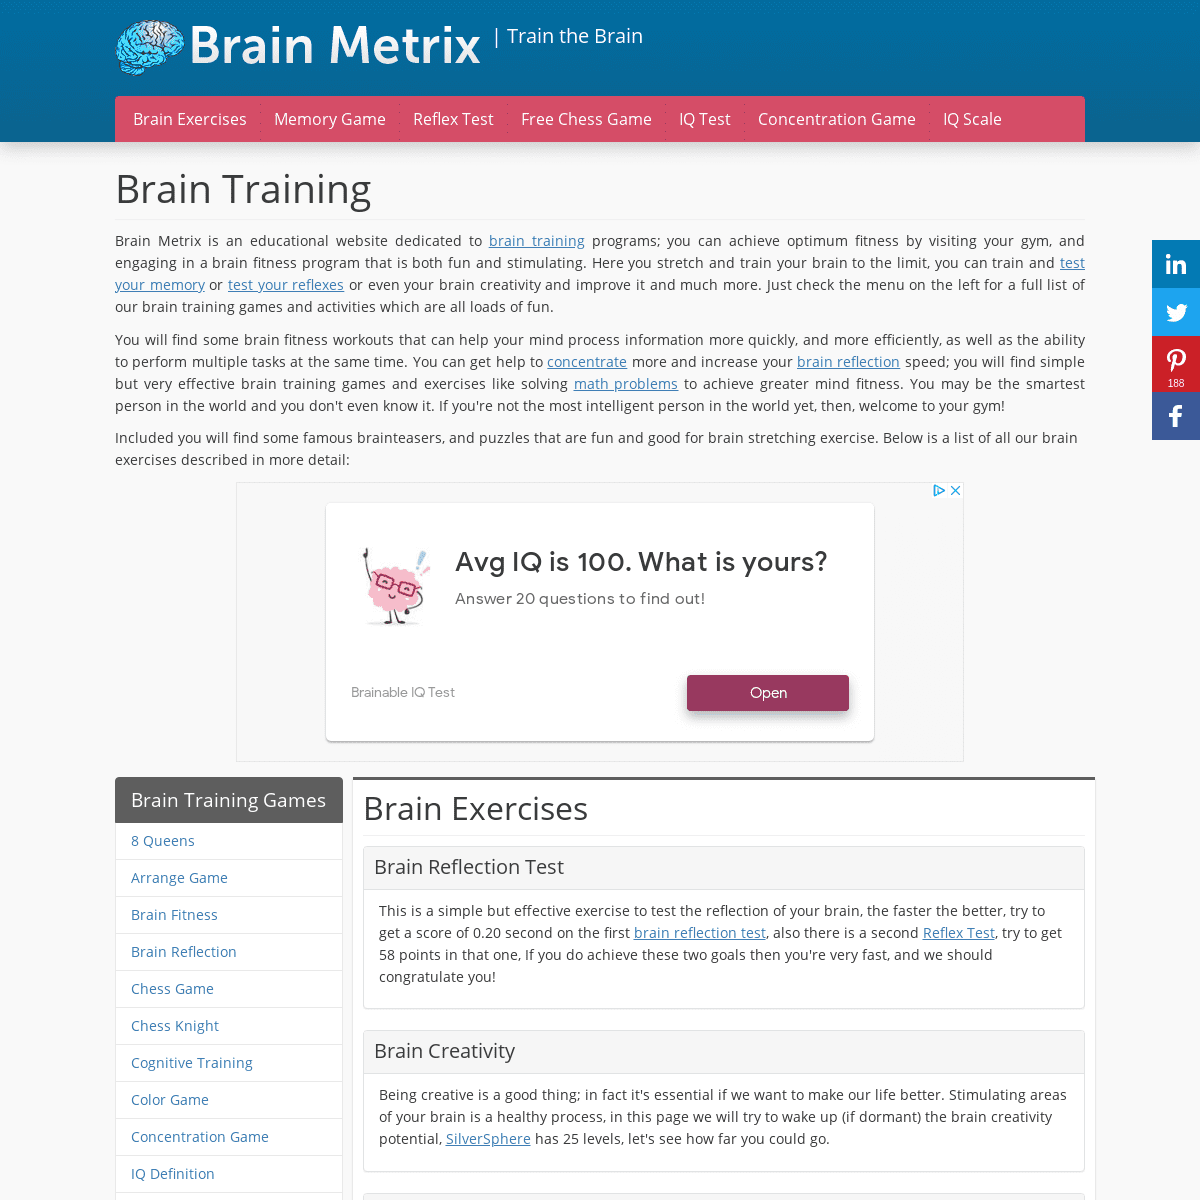 A complete backup of https://brainmetrix.com